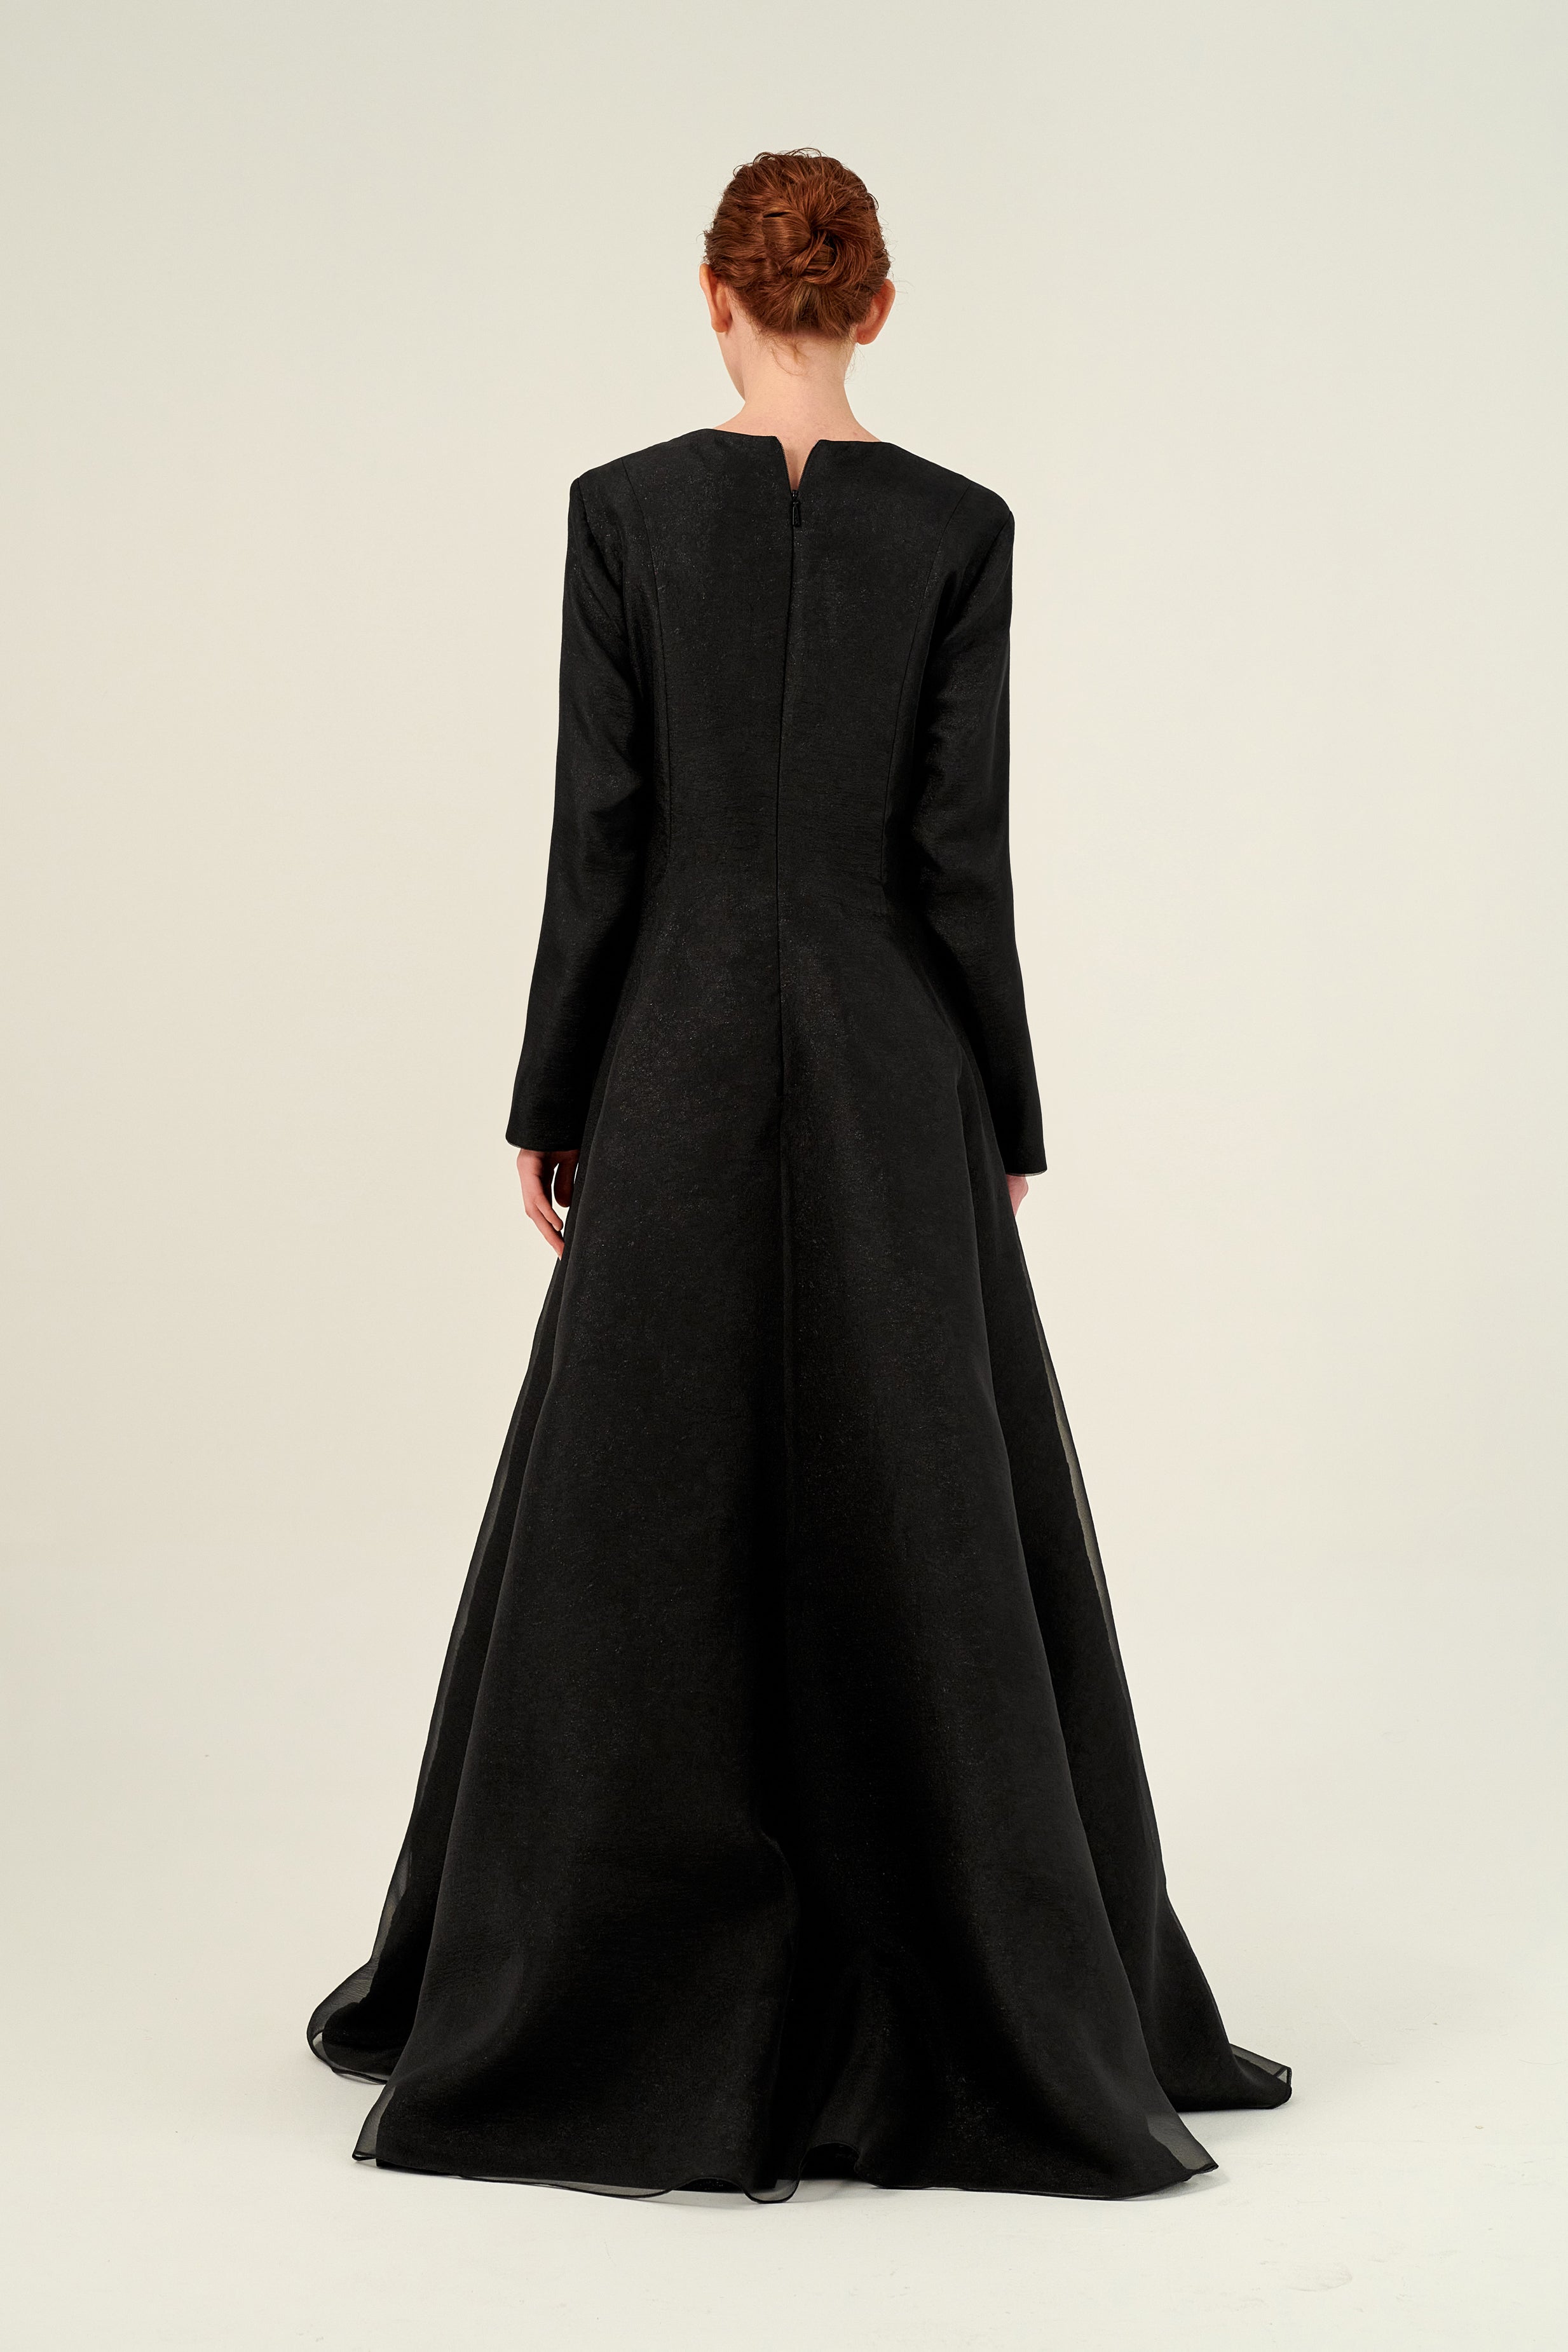 Jewel Neckline Long Sleeve A-Line Silhouette Gown